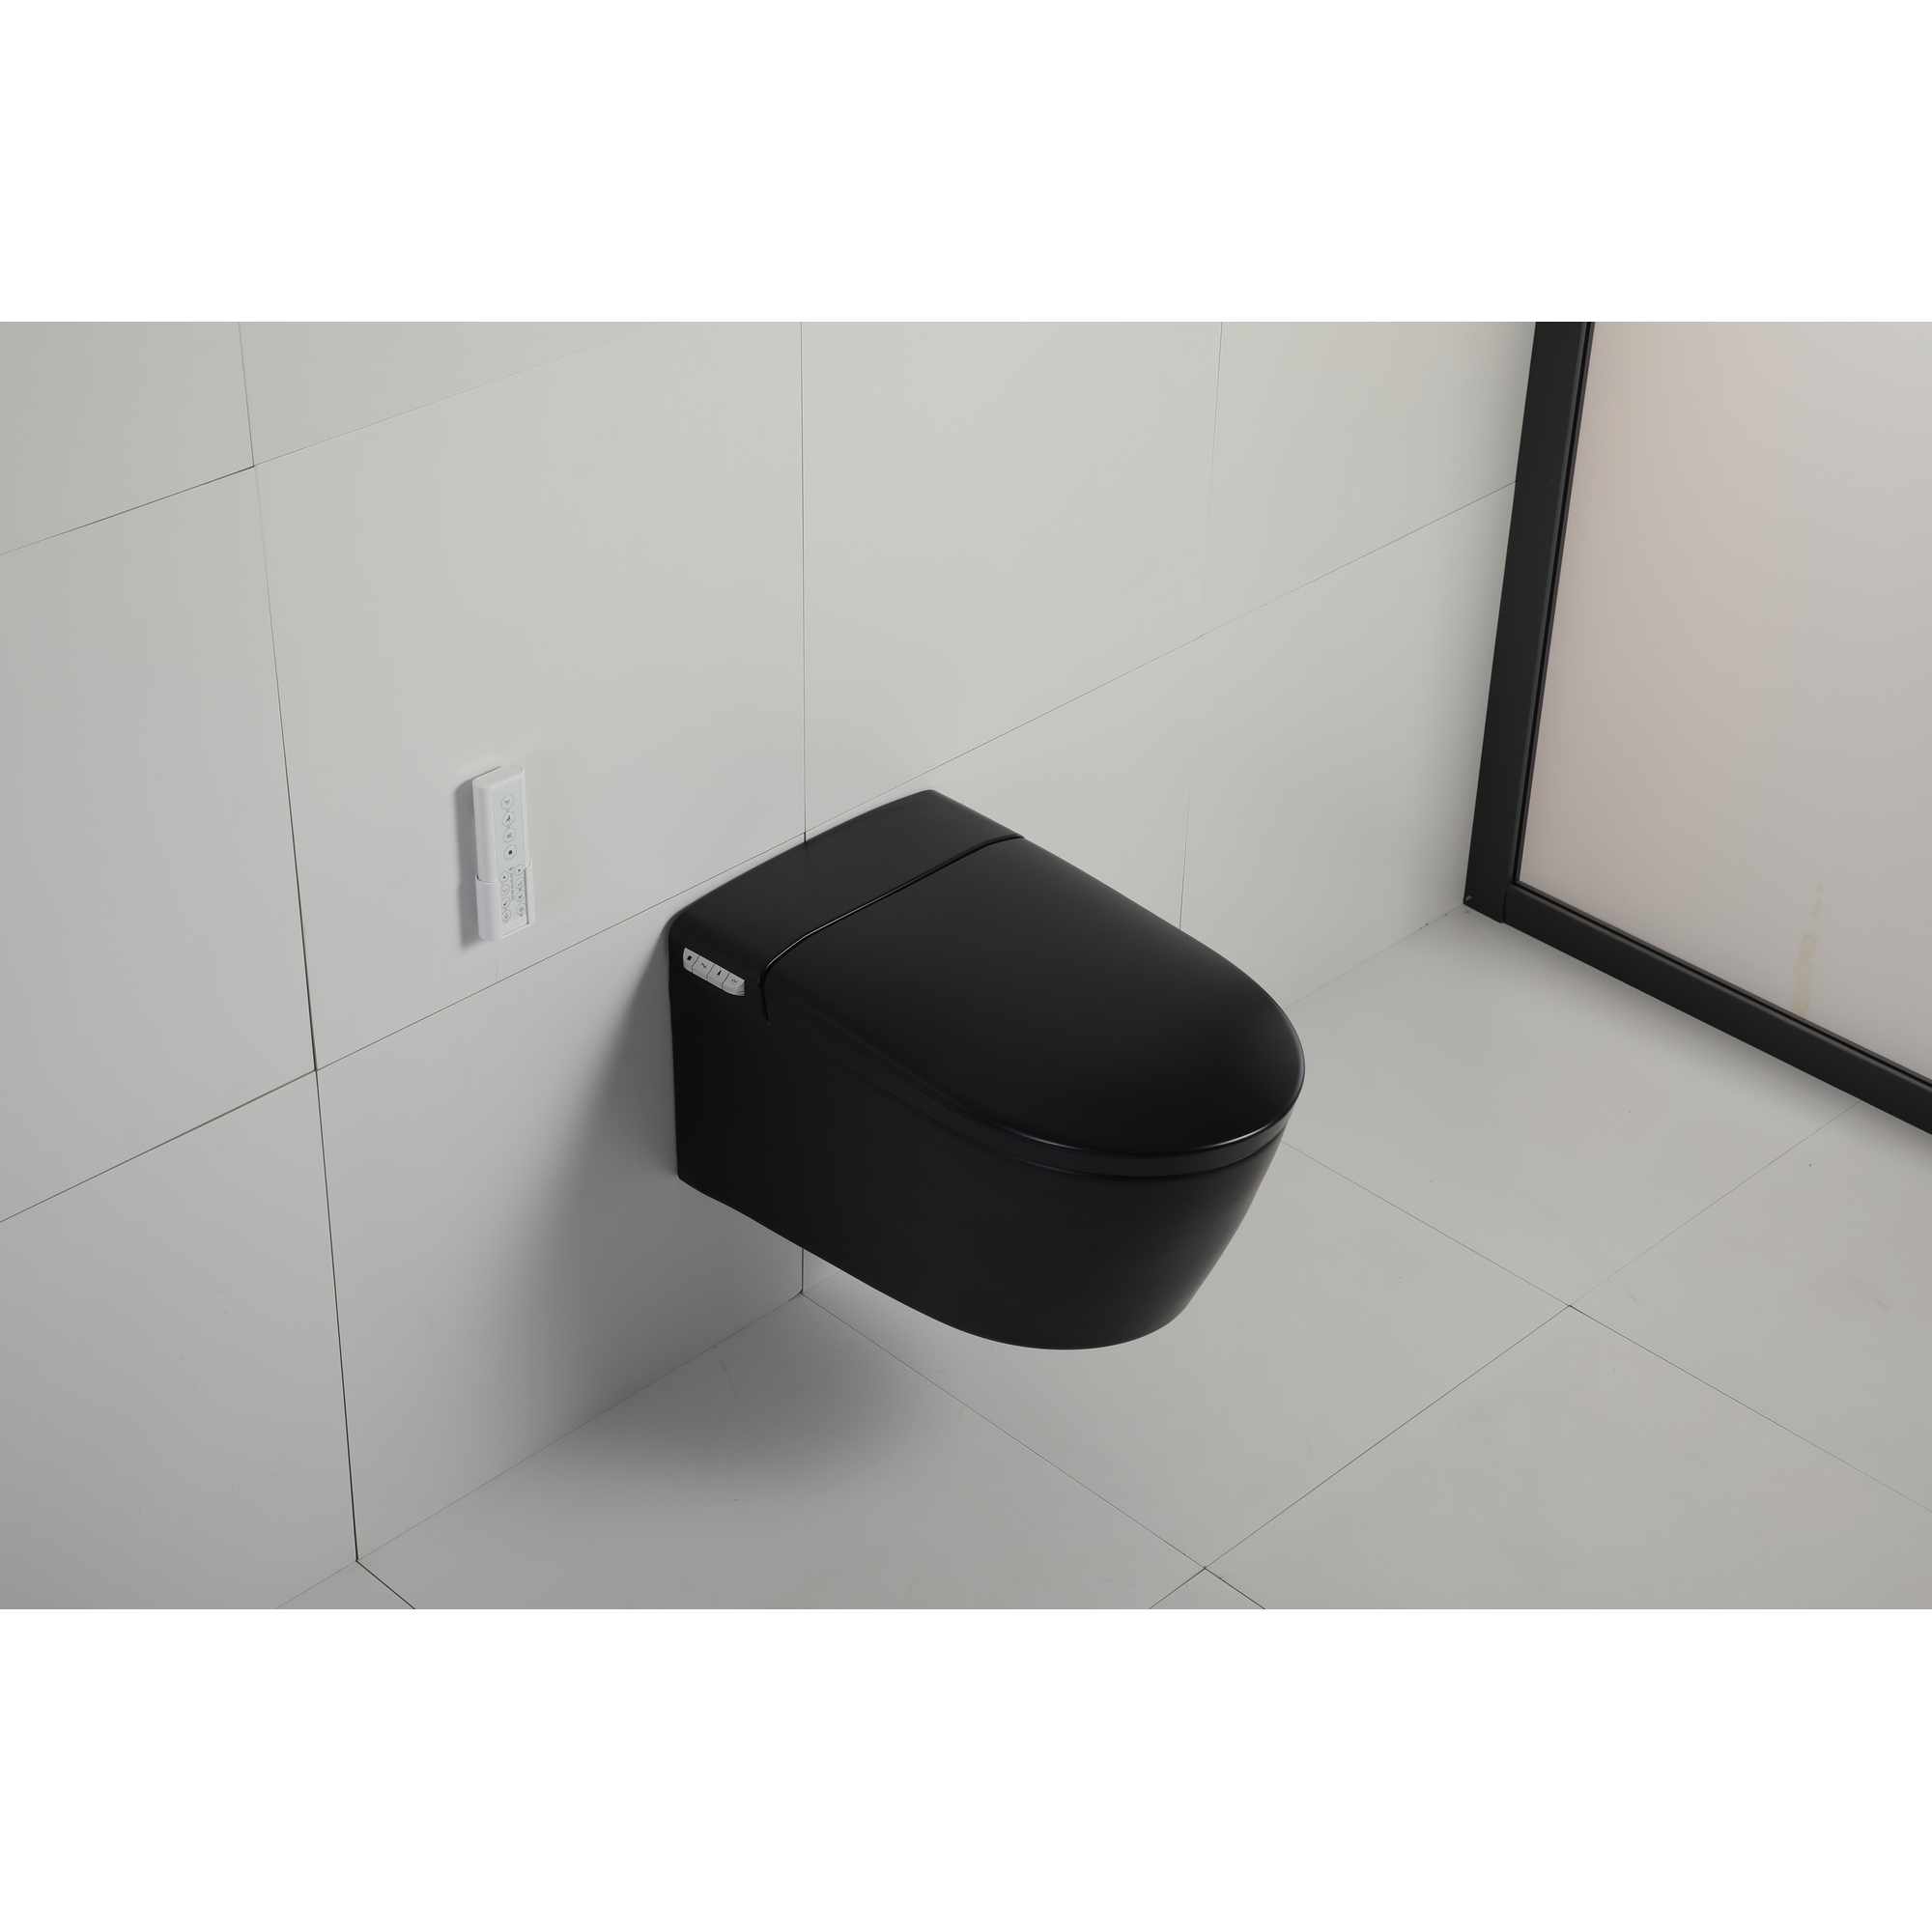 Dusch-WC 'Divino' schwarz spülrandlos, temperaturgesteuerter WC-Sitz + product picture